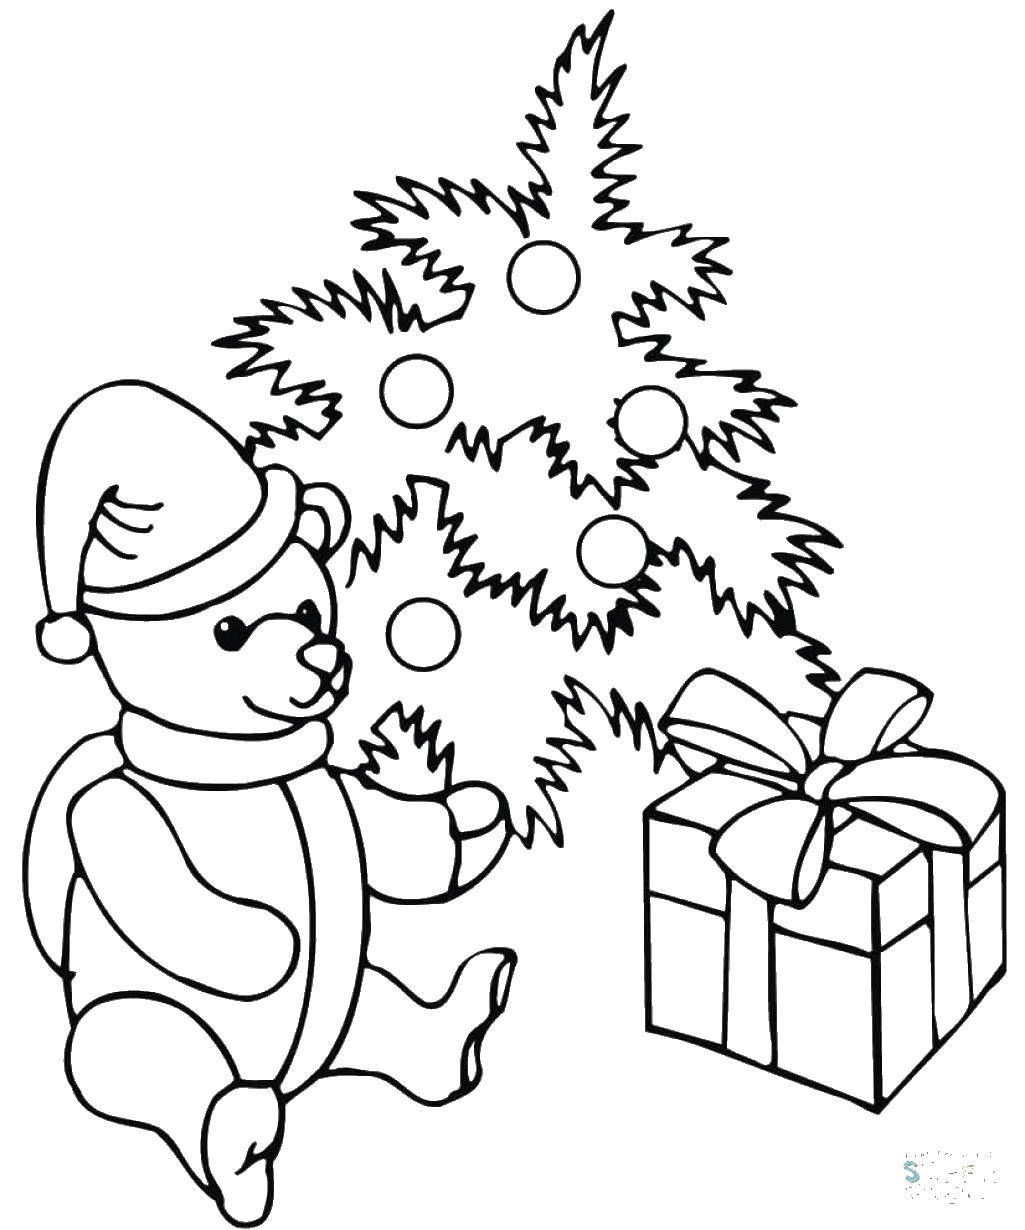 Название: Раскраска Подарки под елкой. Категория: новый год. Теги: Новый год, елка, подарки, мишка.